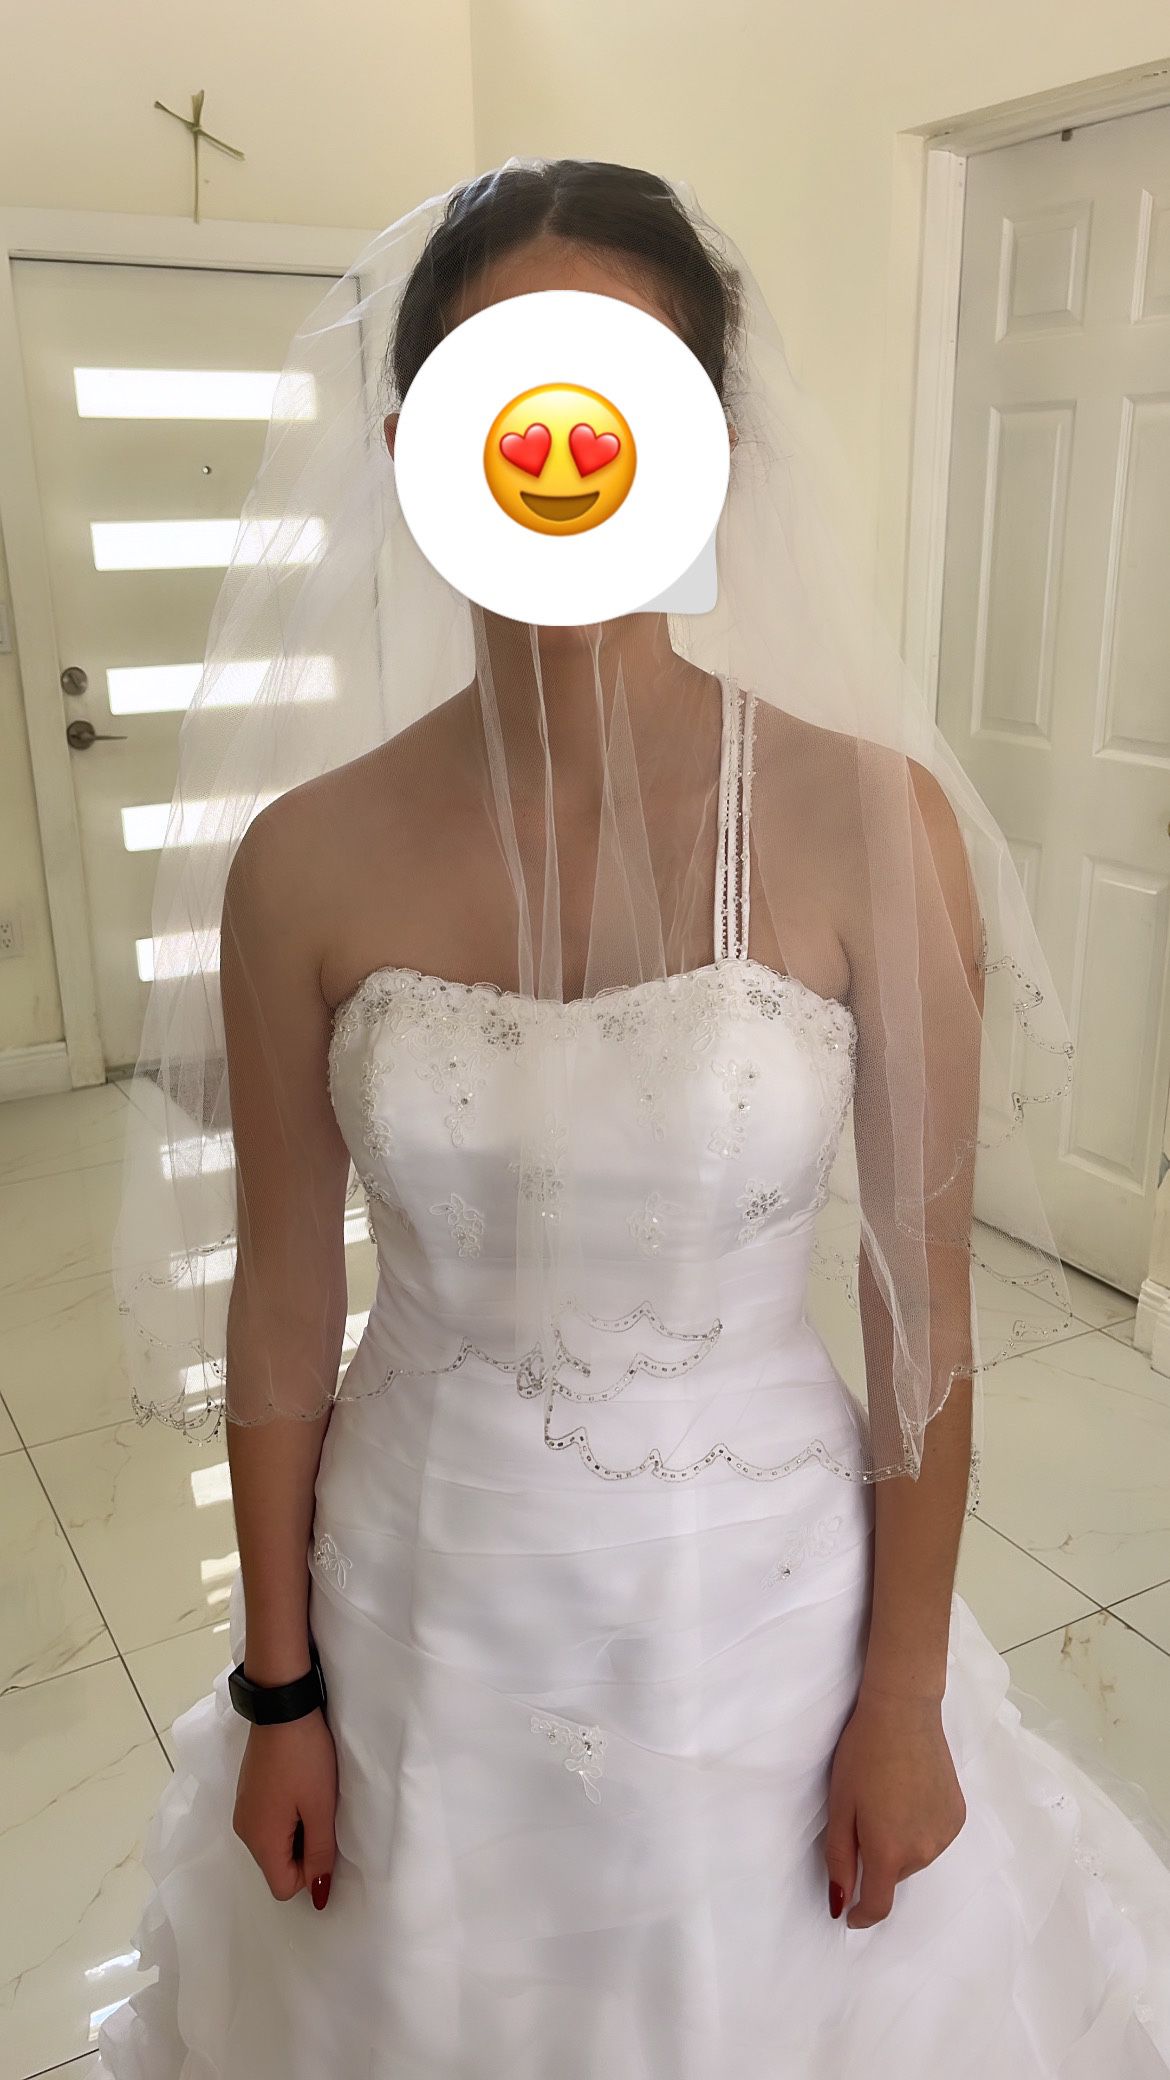 David’s Bridal Wedding Dress Vestido De Novia 